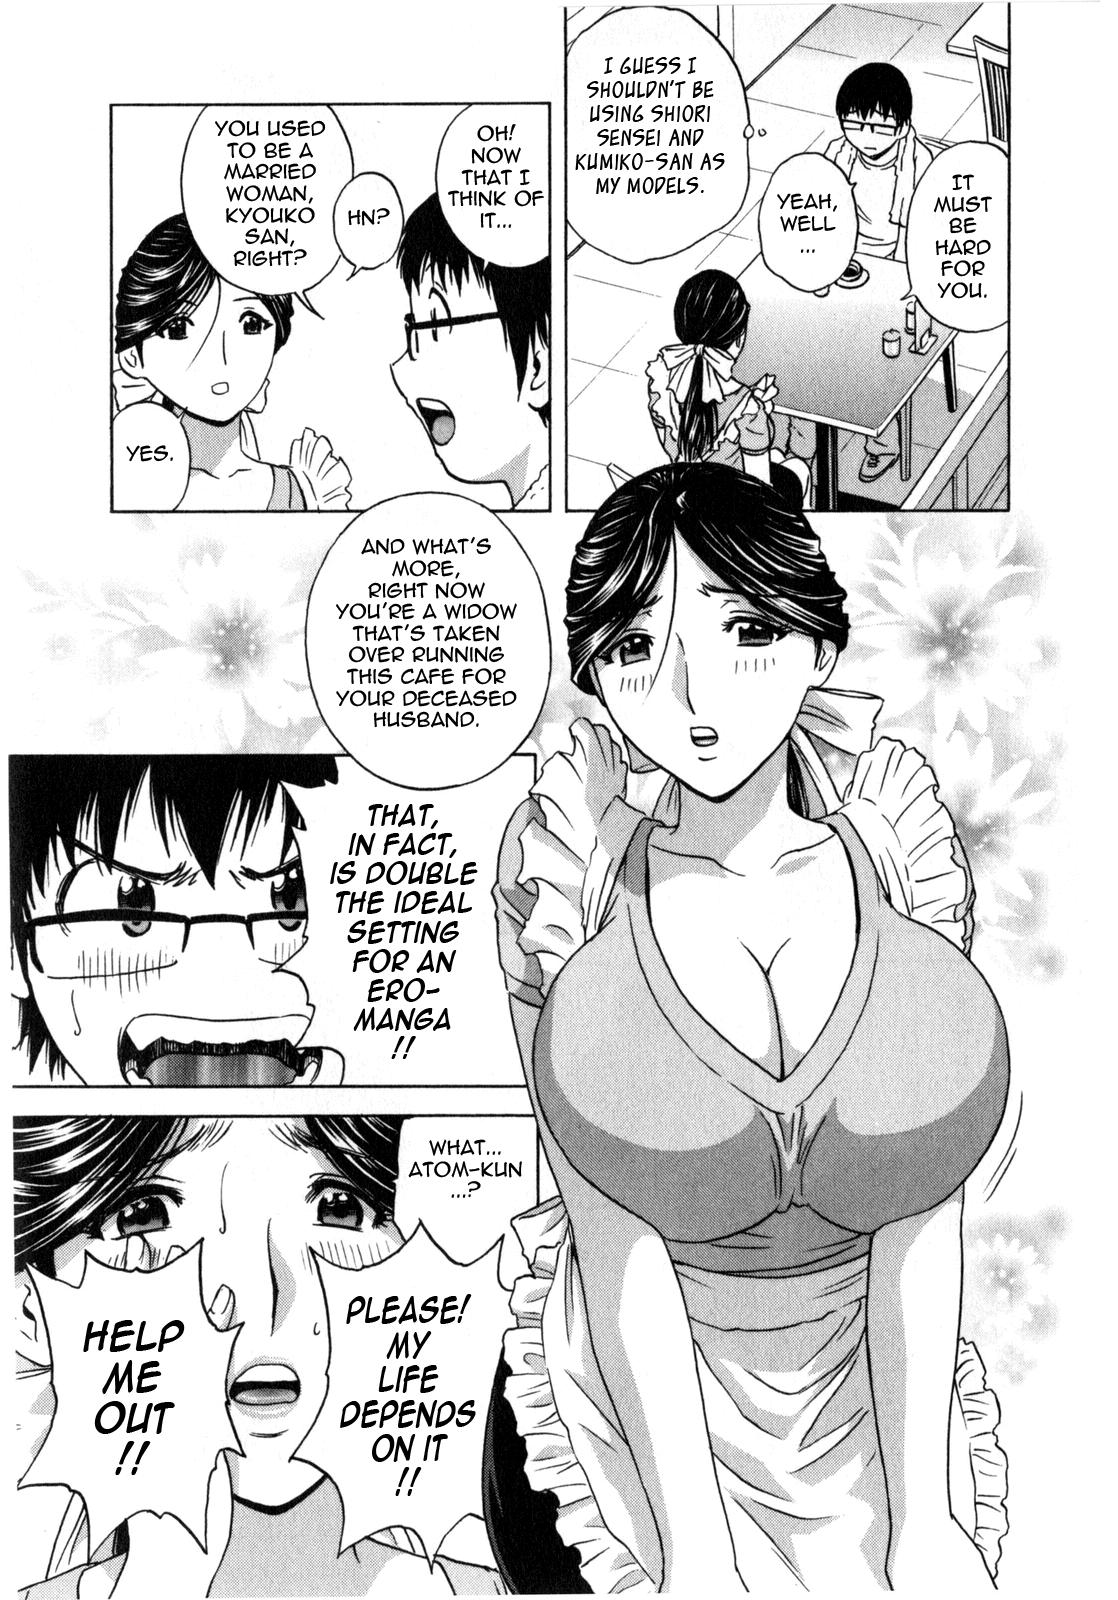 Life with Married Women Just Like a Manga 1 69